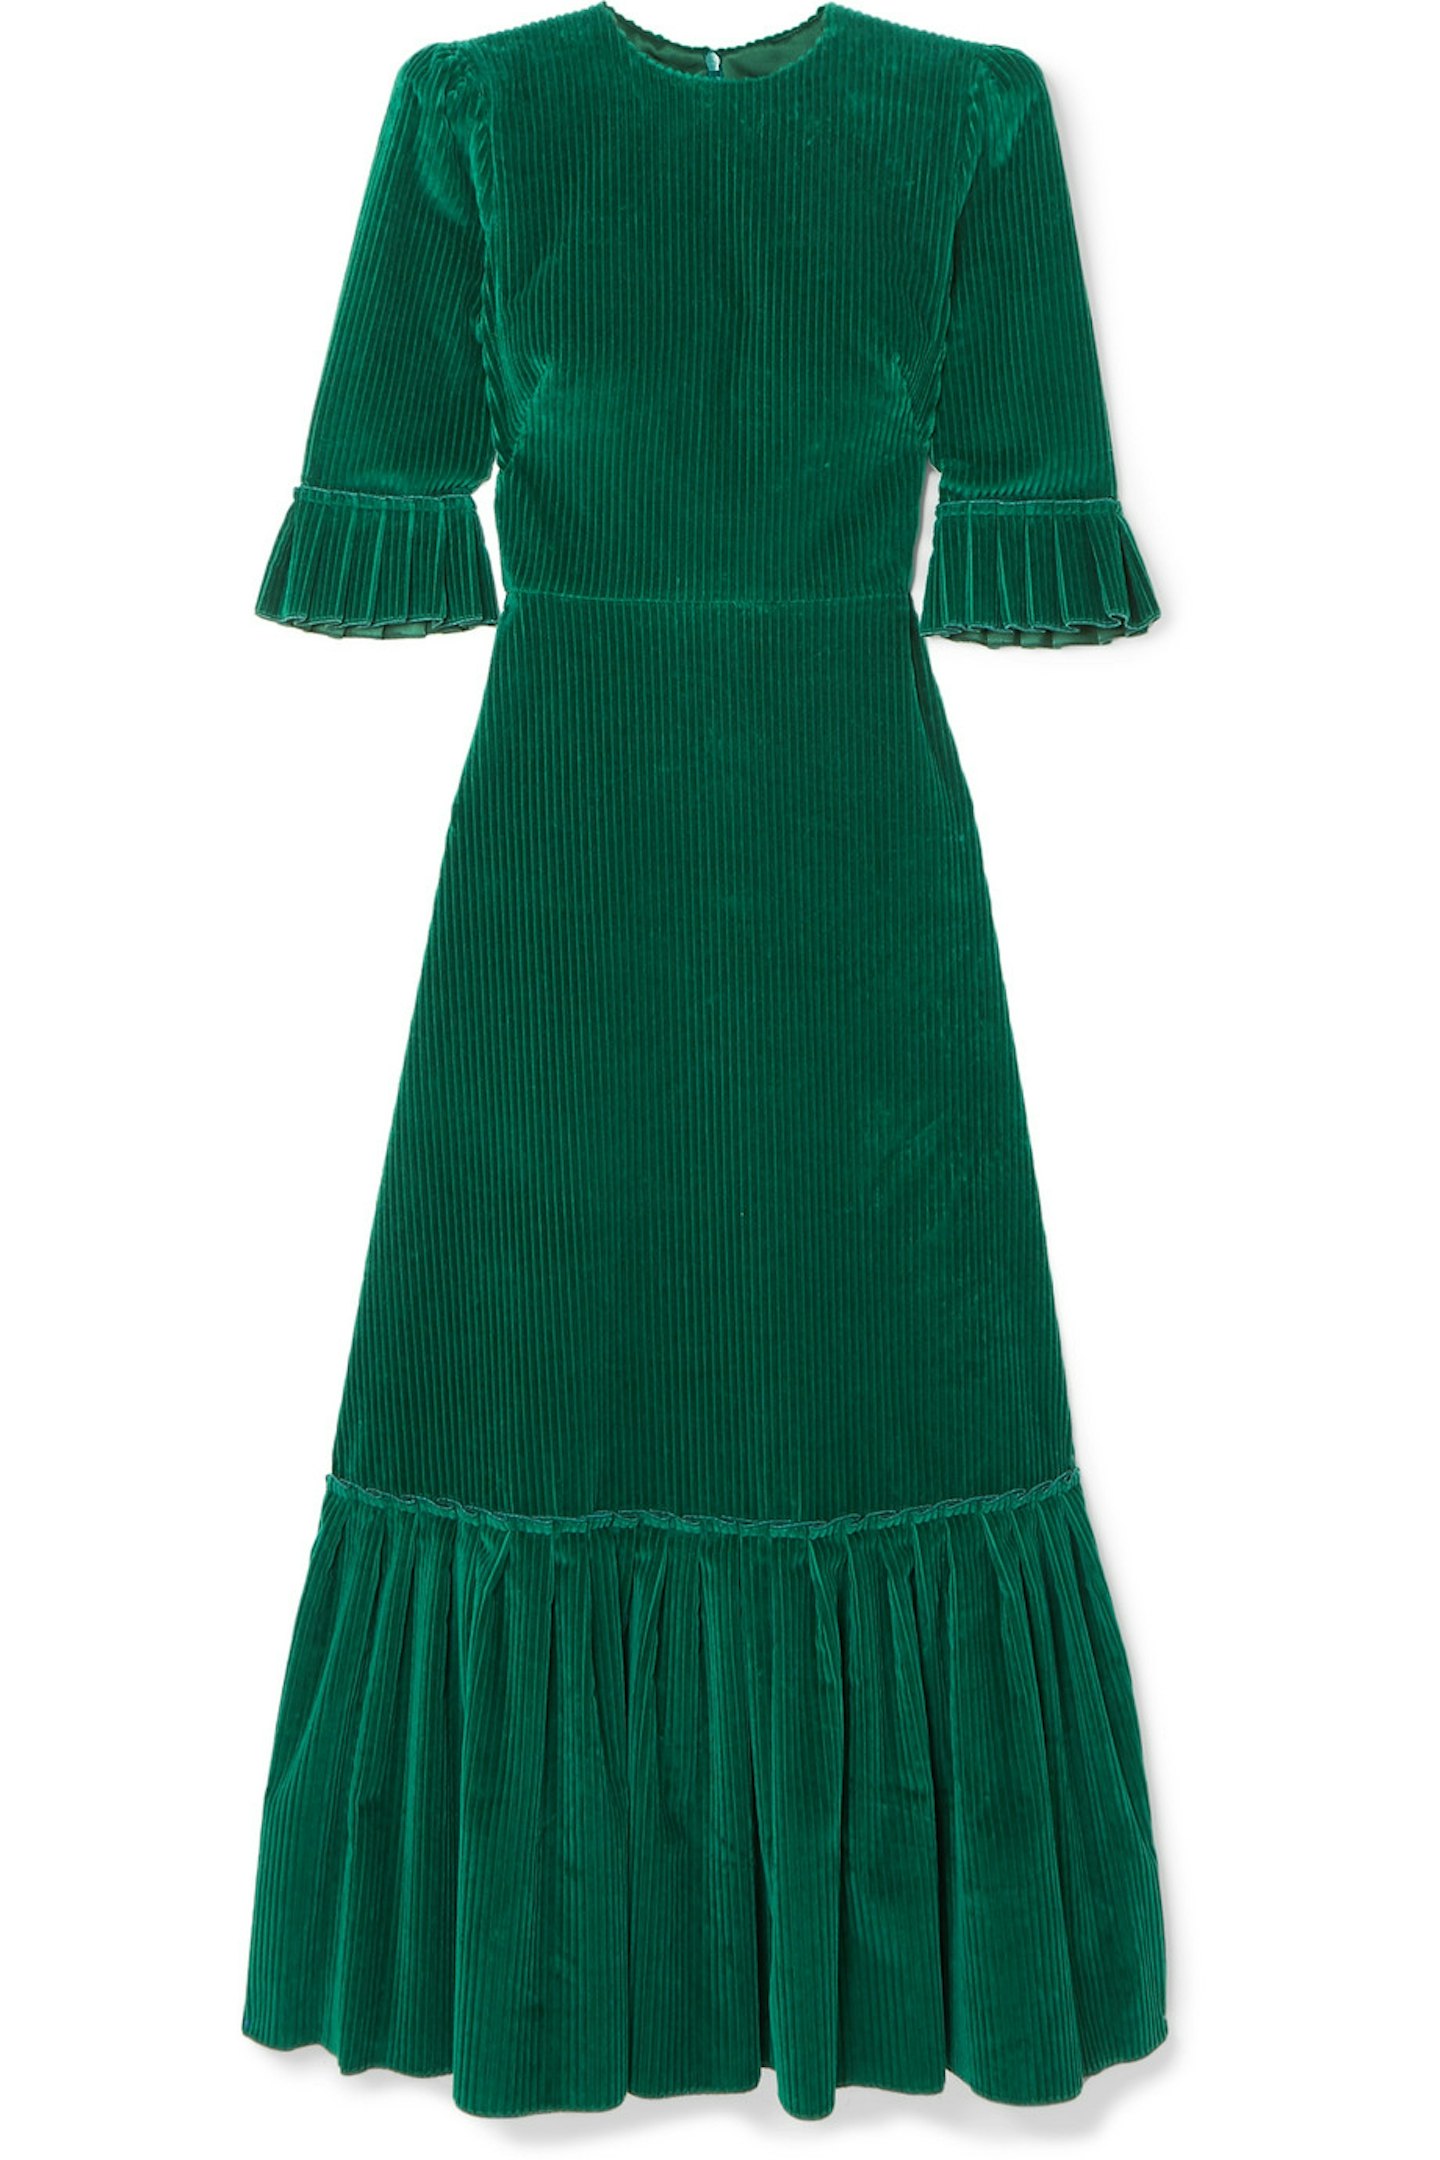 Emerald Corduroy Dress, £695